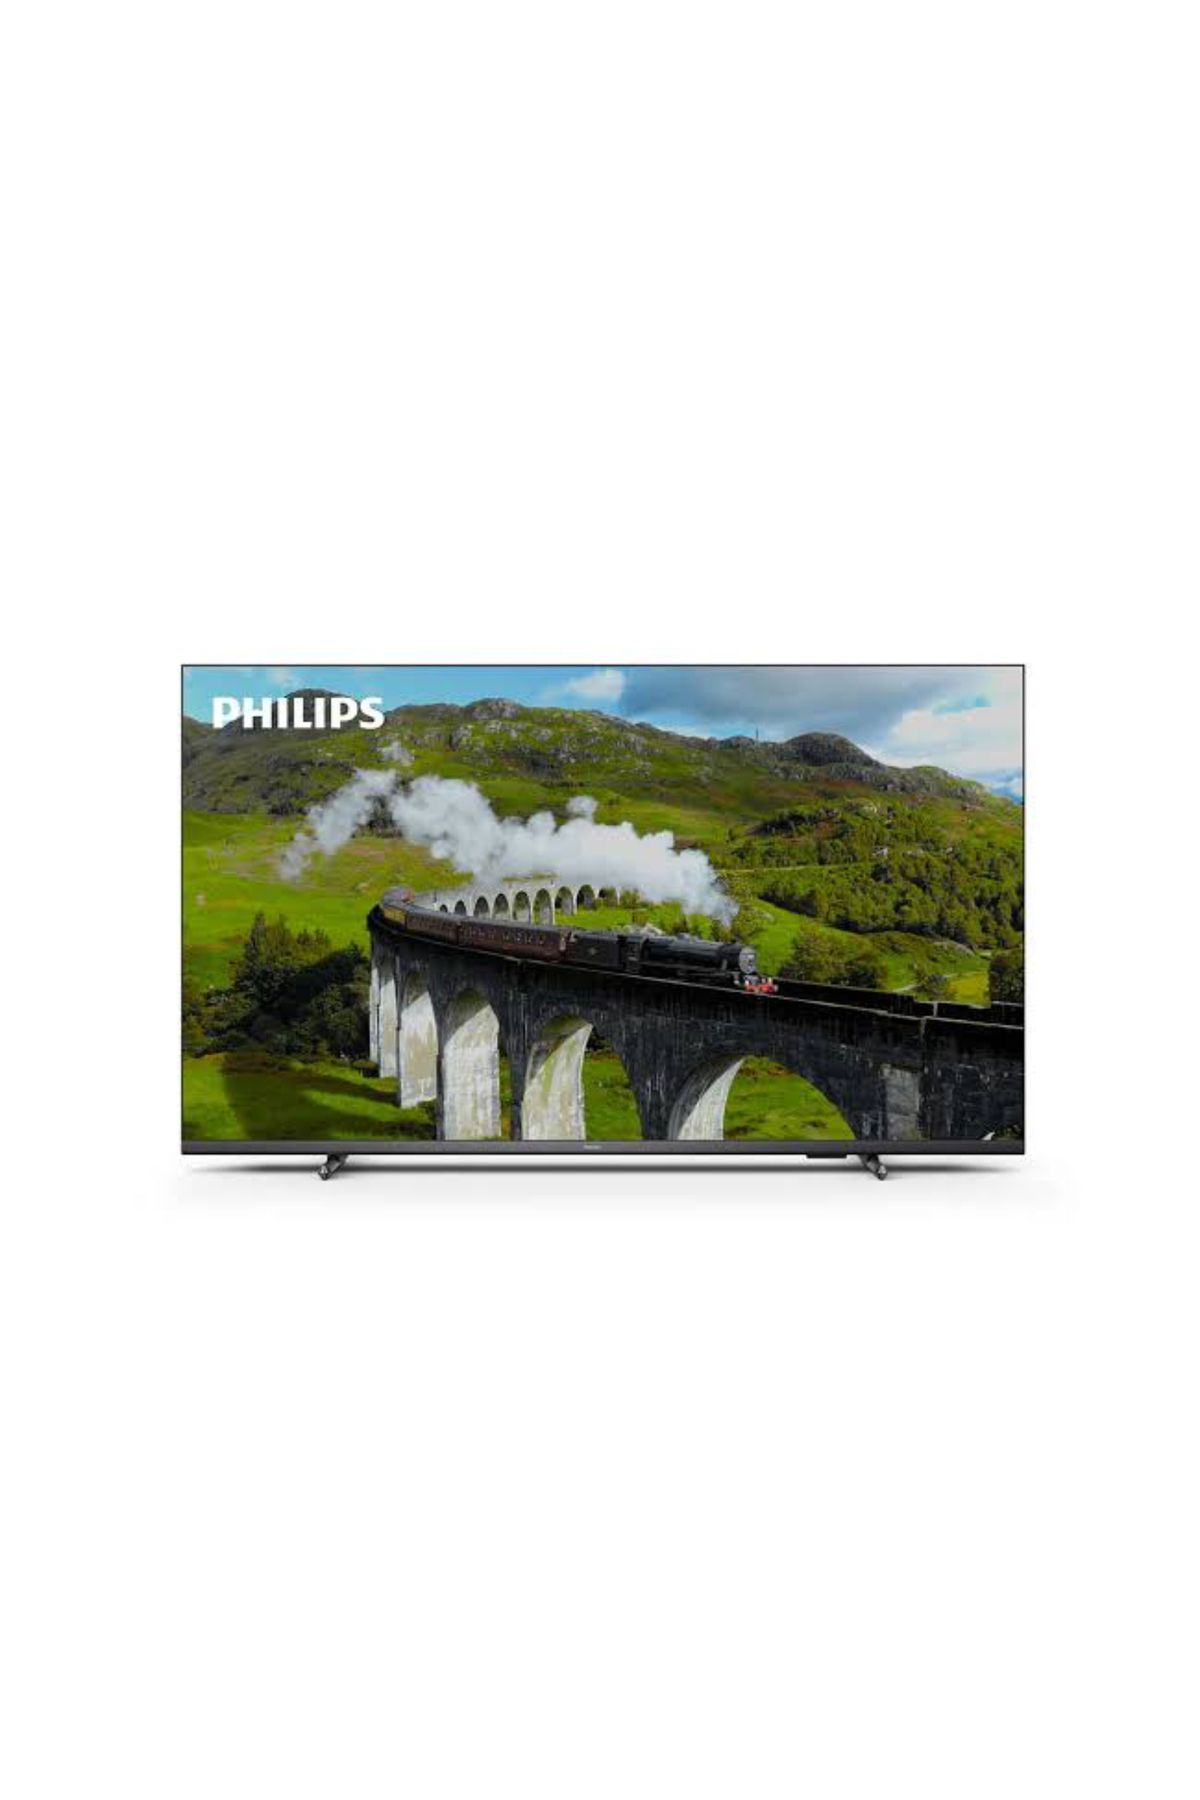 Philips 50PUS7608 50" UHD Smart Led Tv